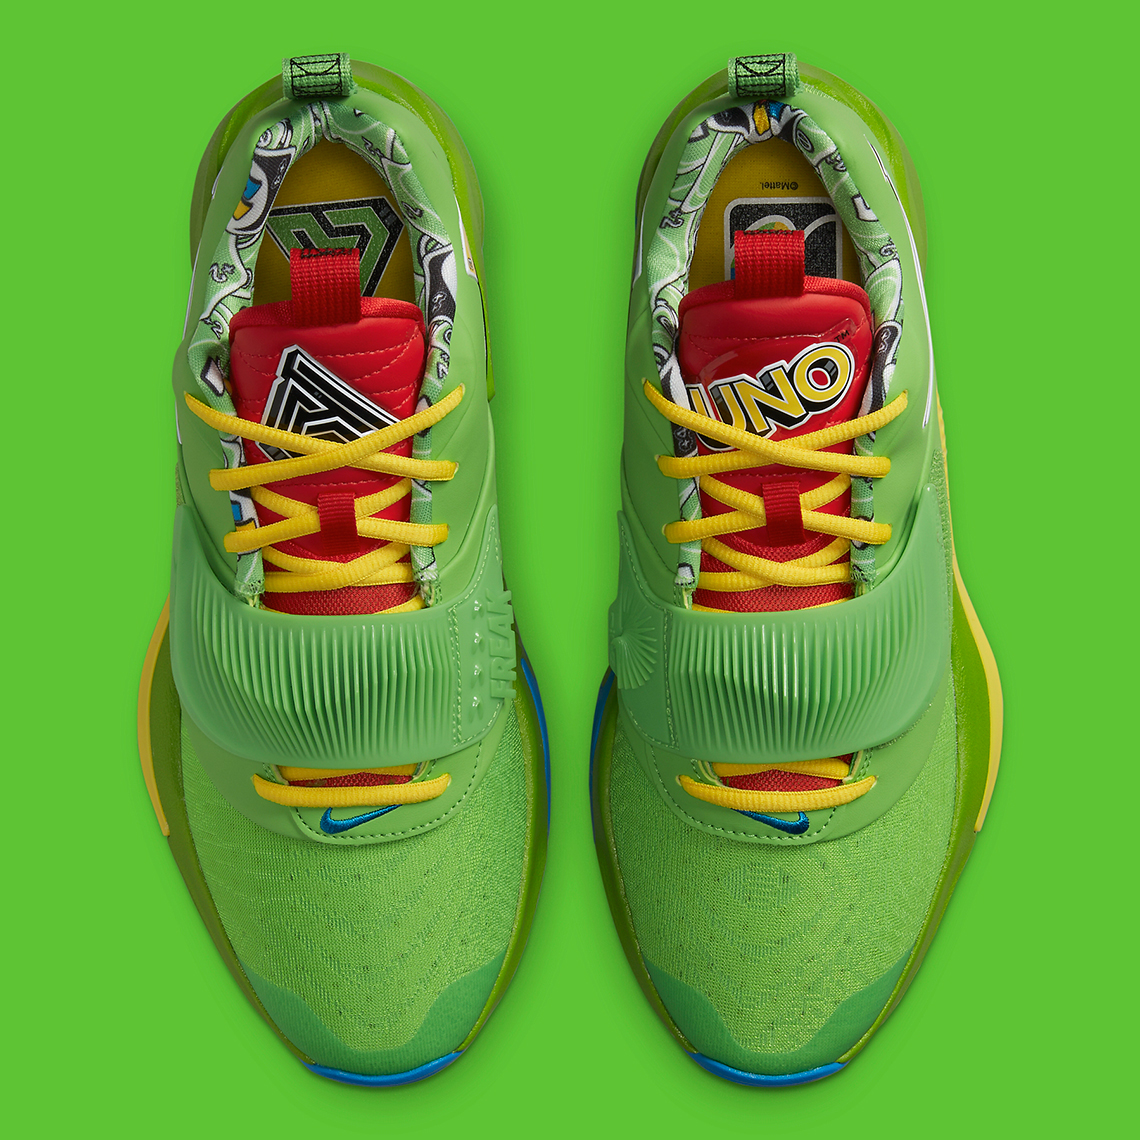 Nike Nike Air Jordan kicks in black and white Nrg Uno Green Bean Dc9364 300 1